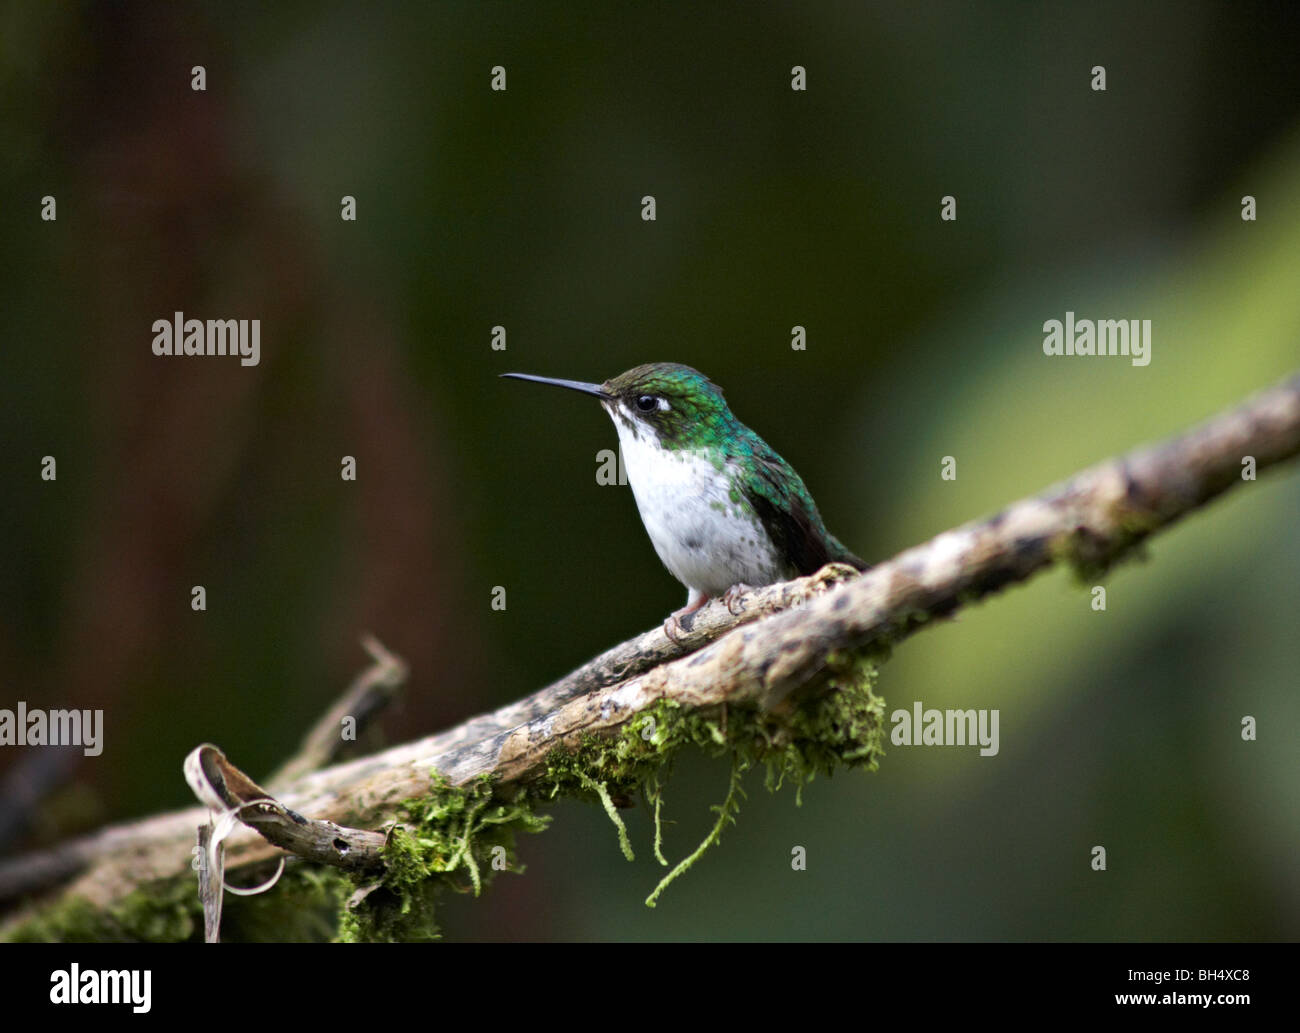 Andean emerald (Amazilia franciae) hummingbird perched on branch. Stock Photo